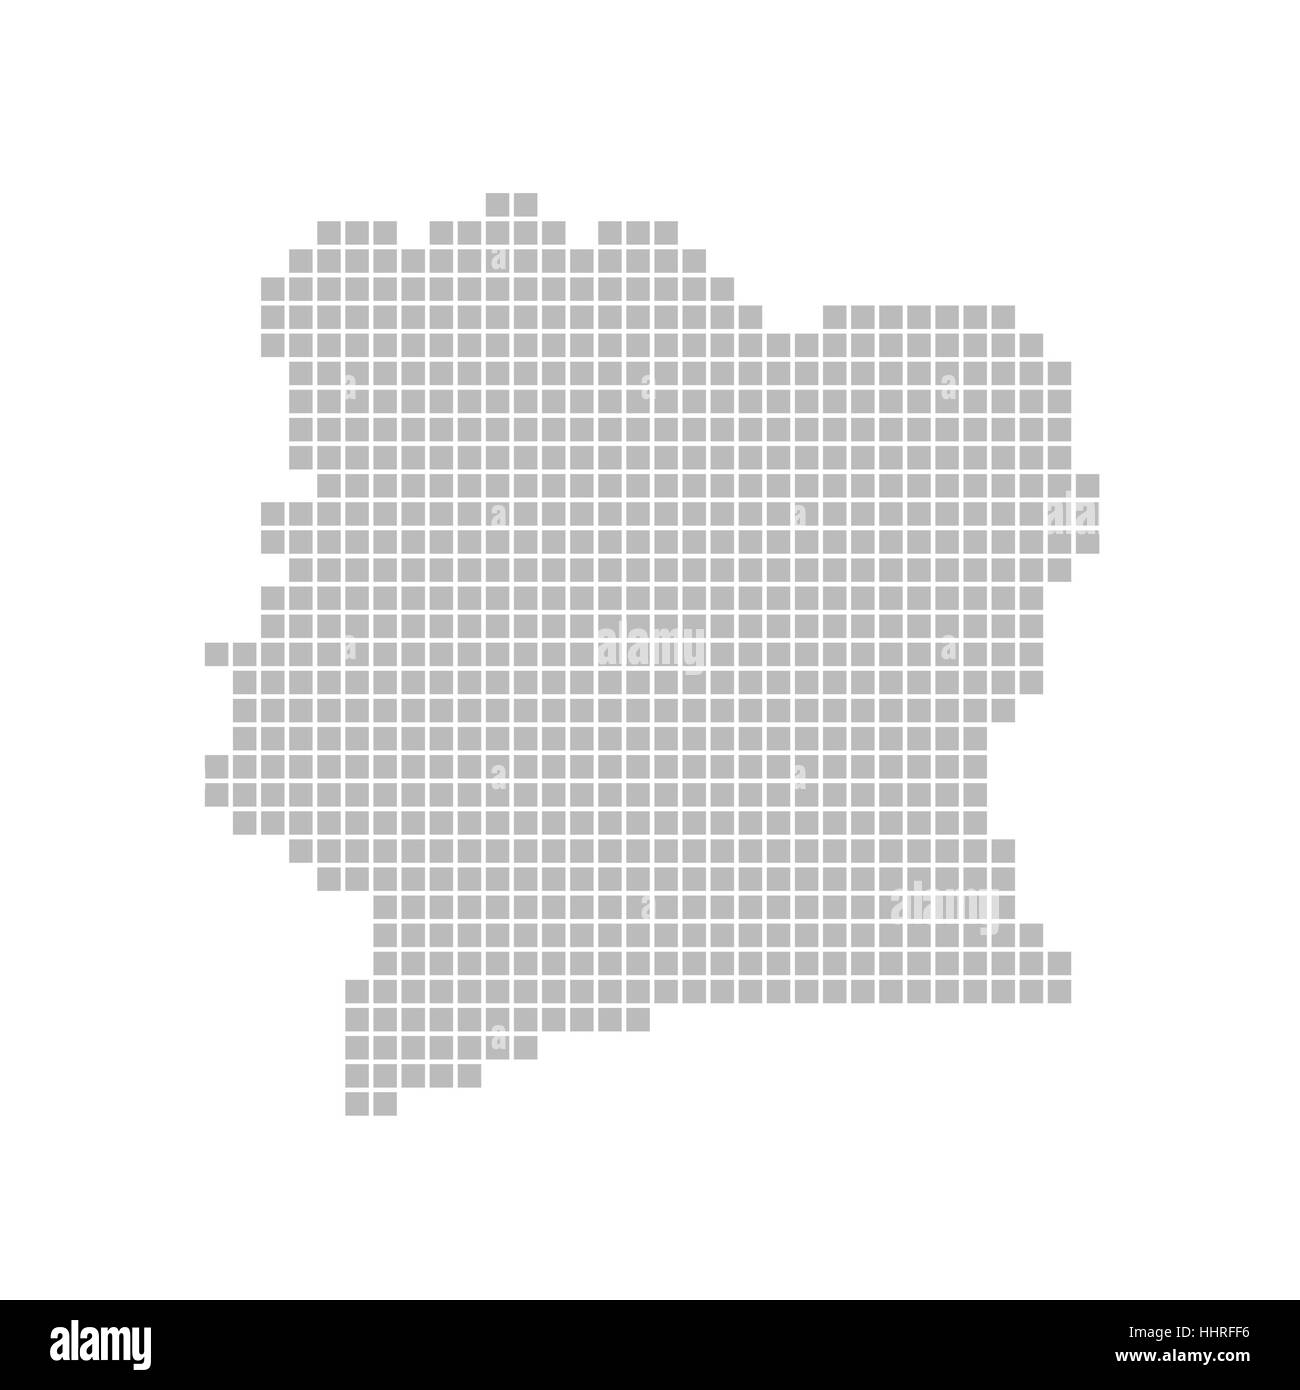 map of pixels: Stock Photo